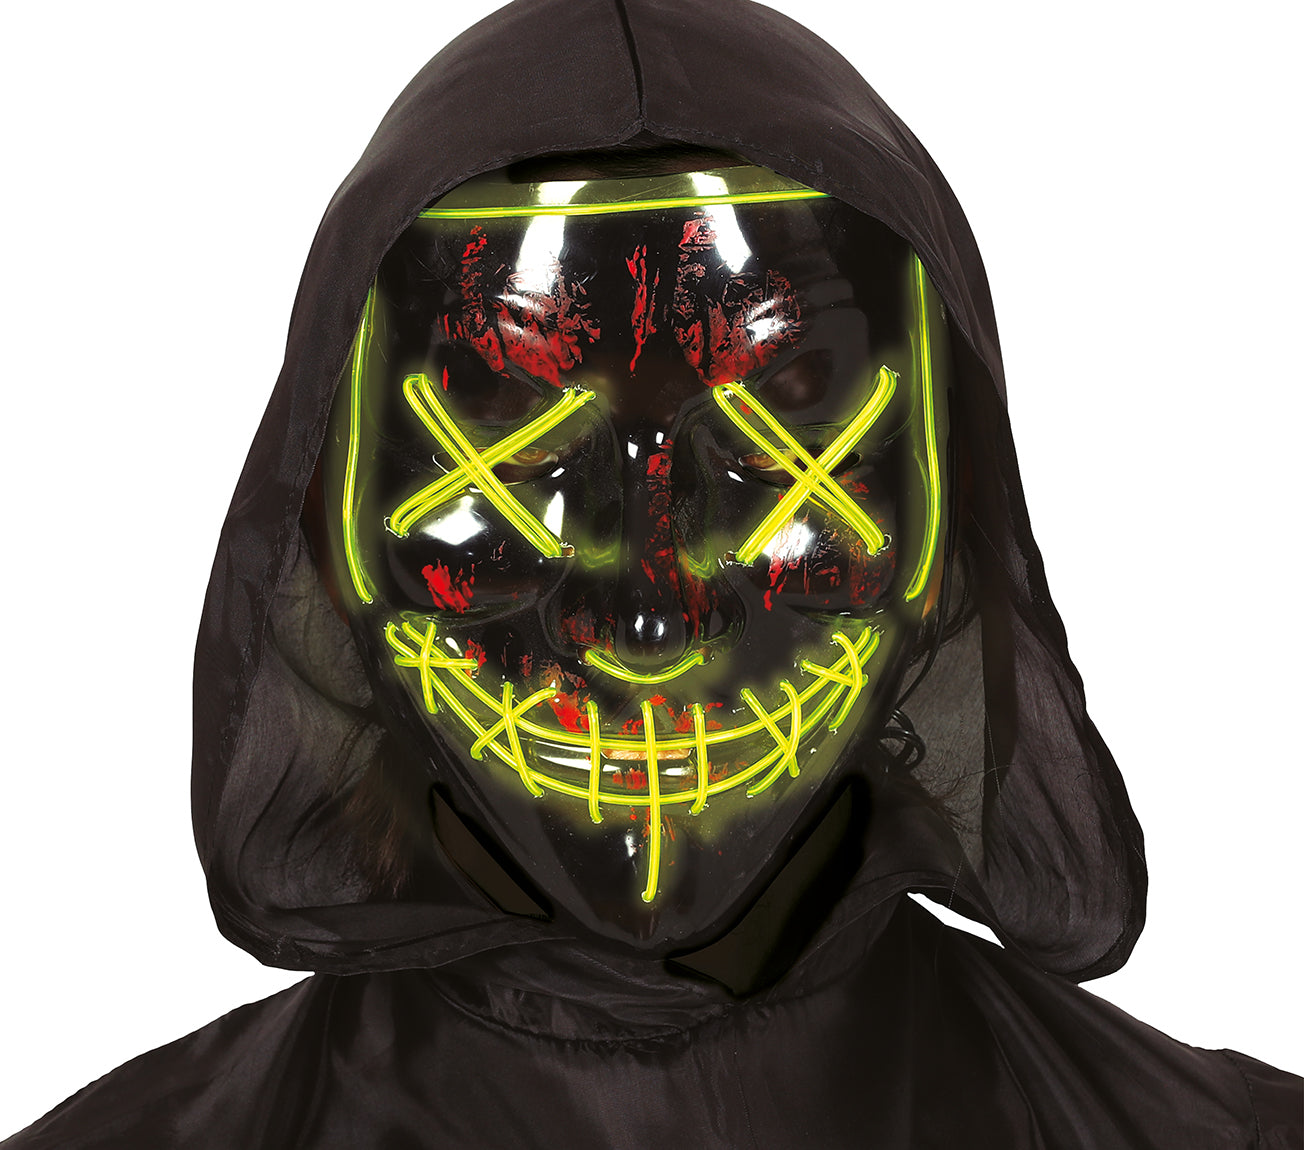 Black Mask With Light